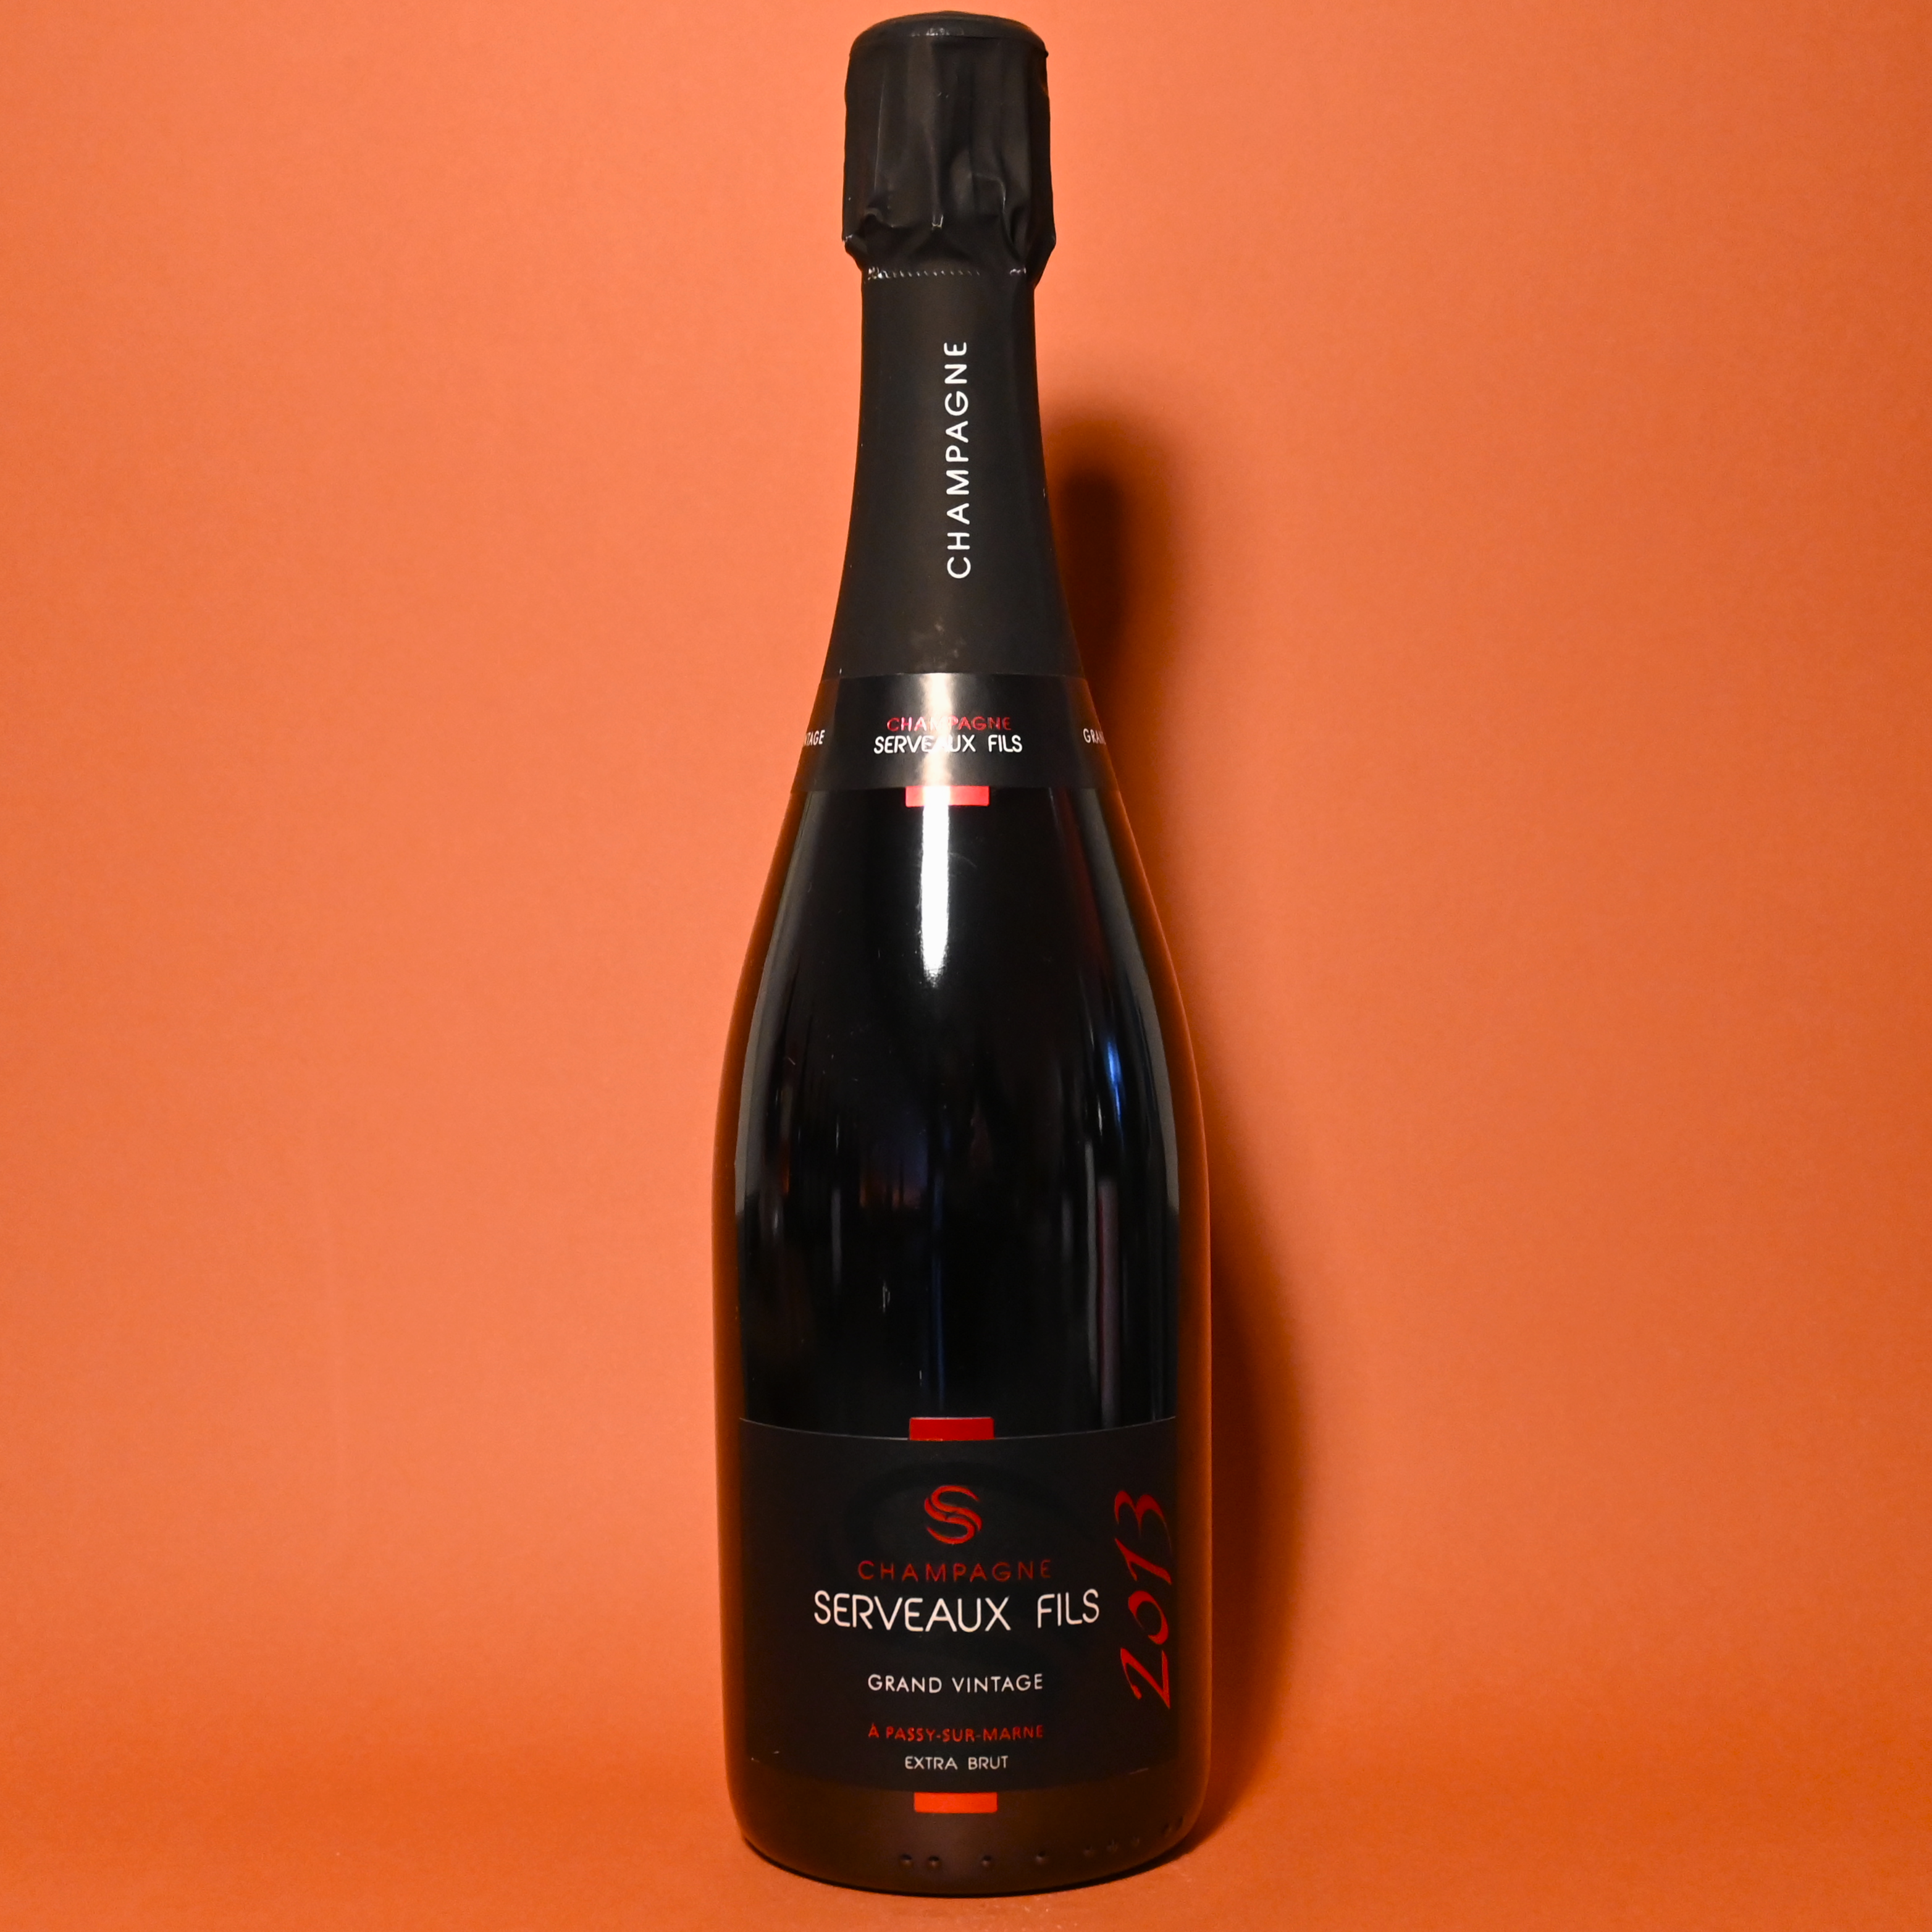 Serveaux et Fils Champagne Grand Vintage 2013